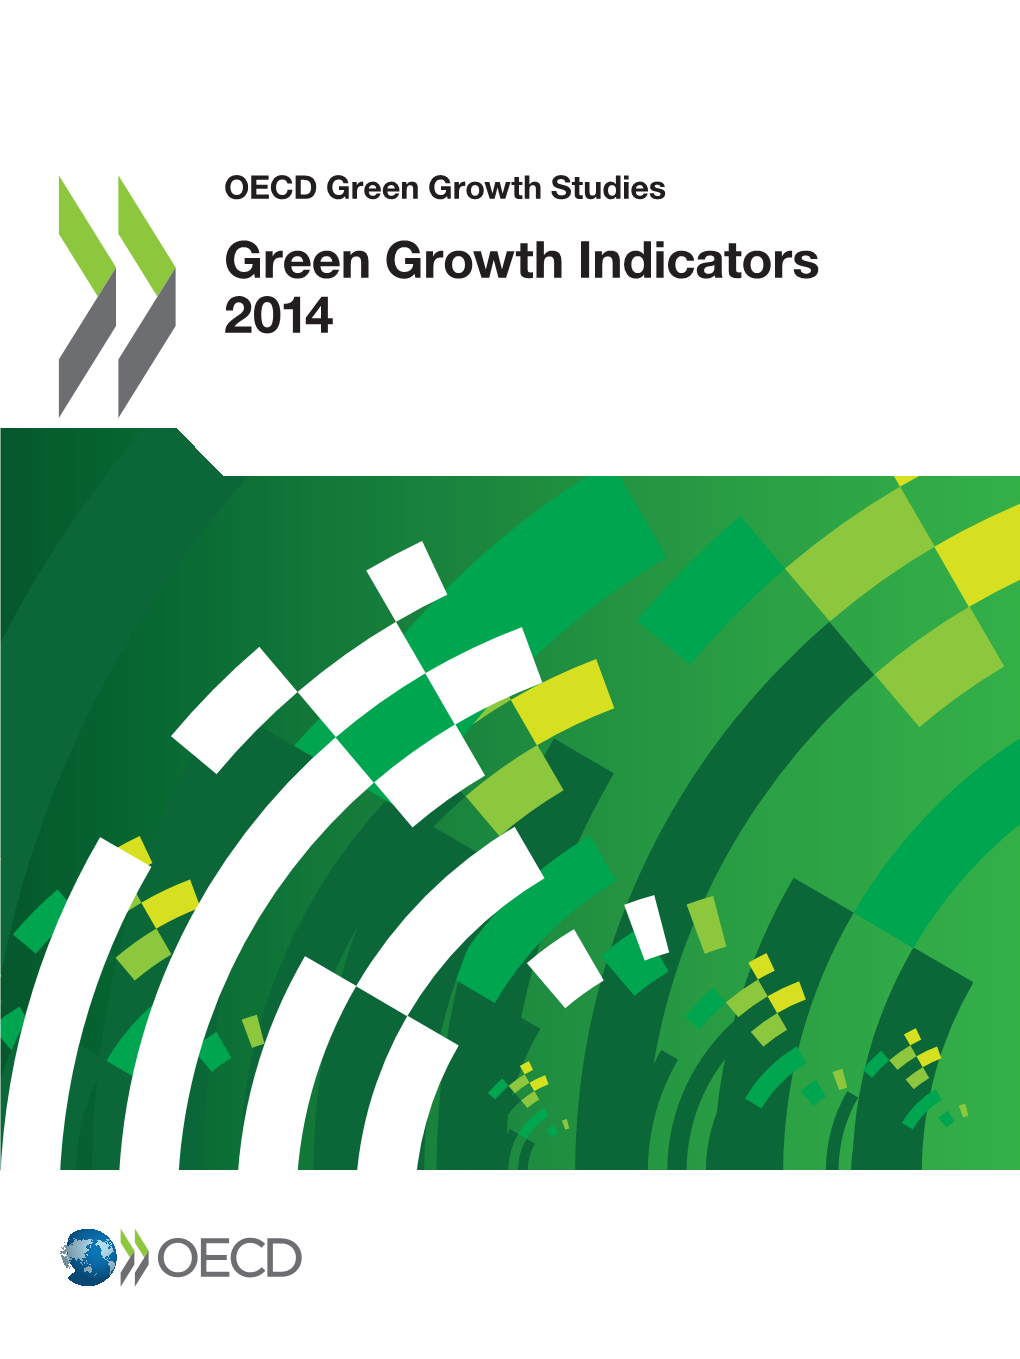 OECD Green Growth Indicators, (2014)